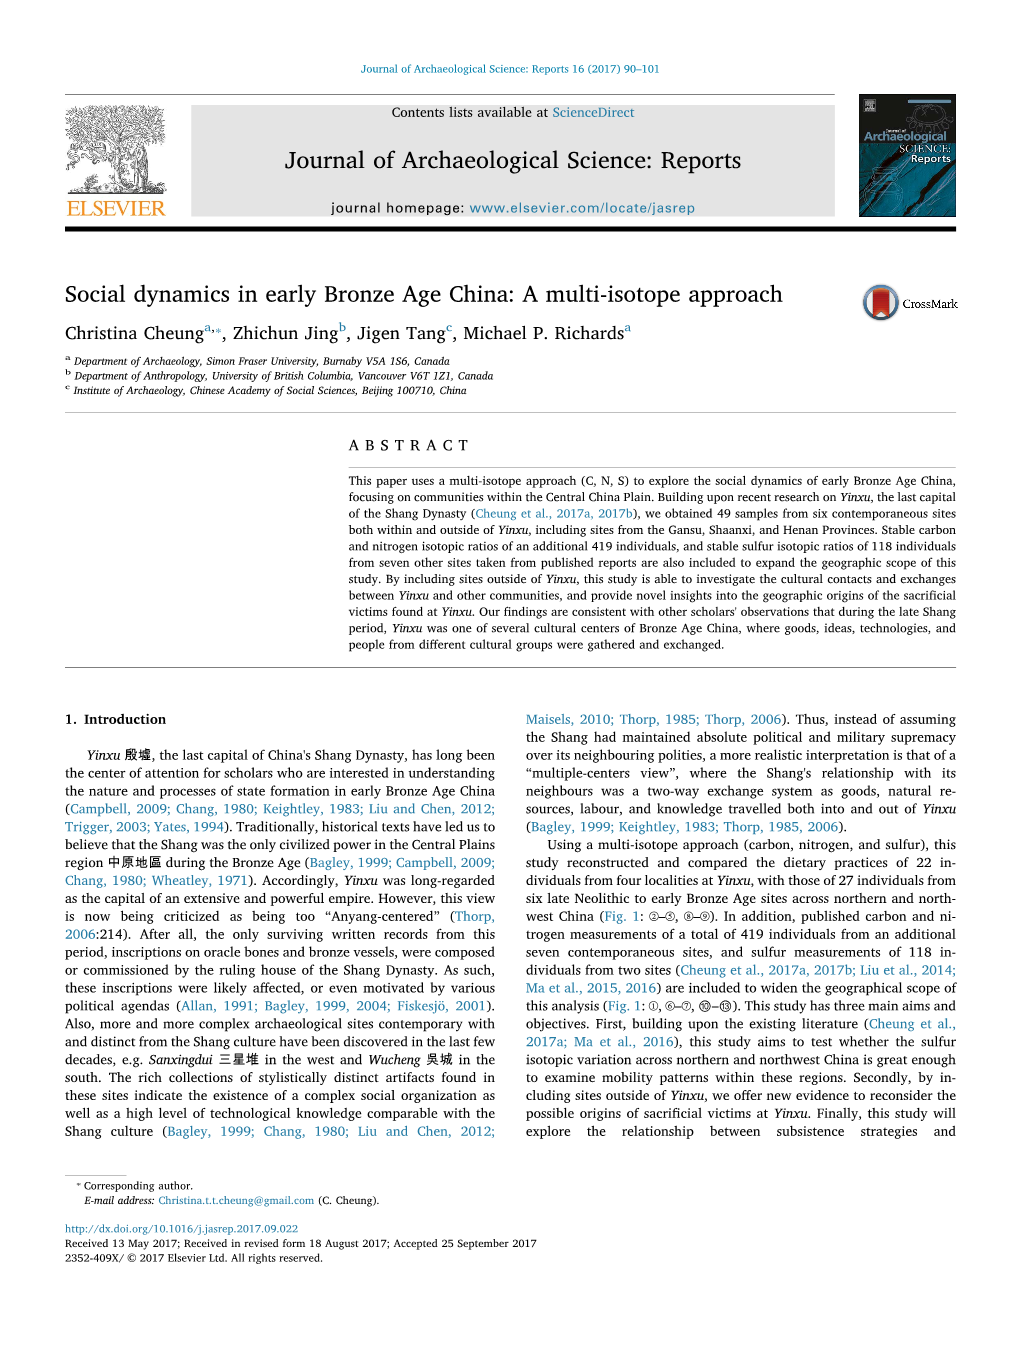 Social Dynamics in Early Bronze Age China: a Multi-Isotope Approach MARK ⁎ Christina Cheunga, , Zhichun Jingb, Jigen Tangc, Michael P